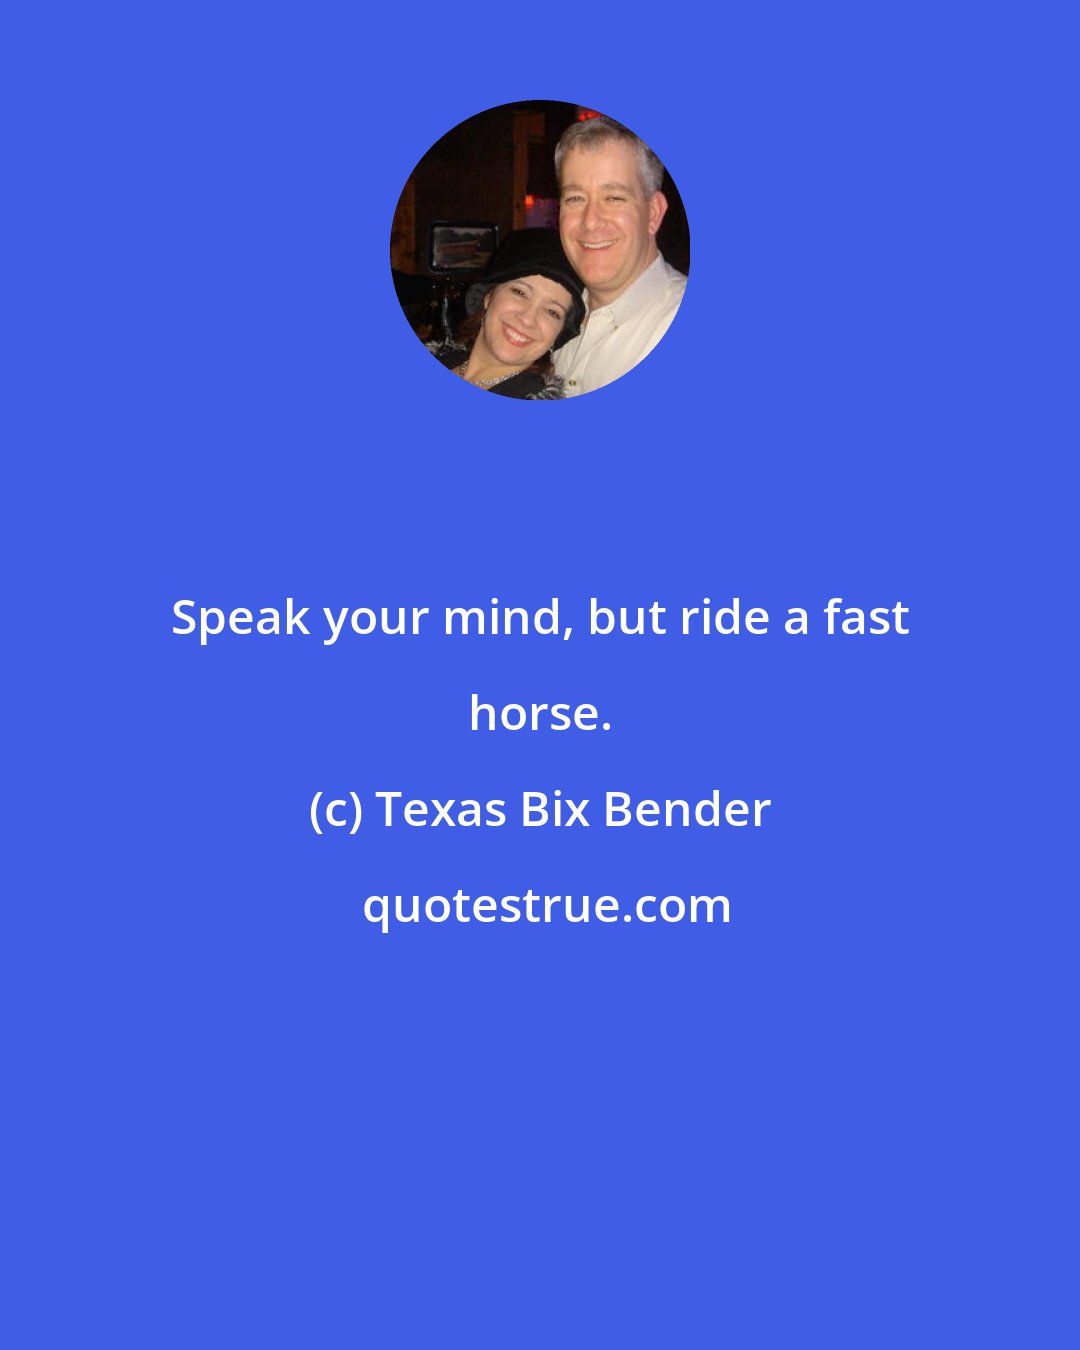 Texas Bix Bender: Speak your mind, but ride a fast horse.